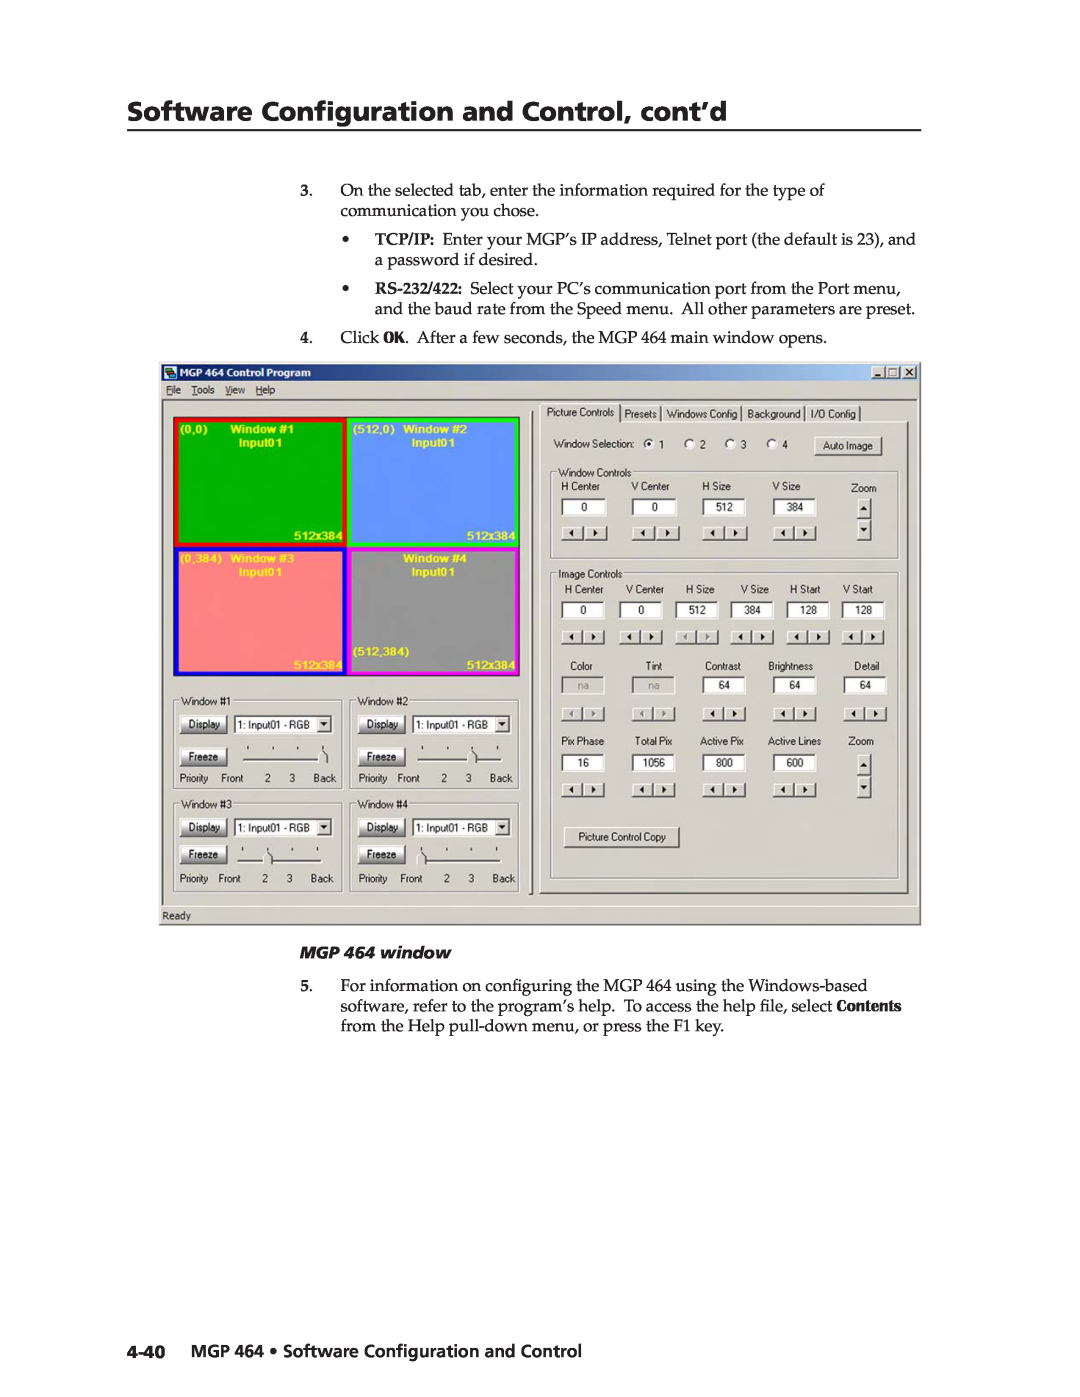 Extron electronic MGP 464 DI manual Preliminary, Software Configuration and Control, cont’d, MGP 464 window 